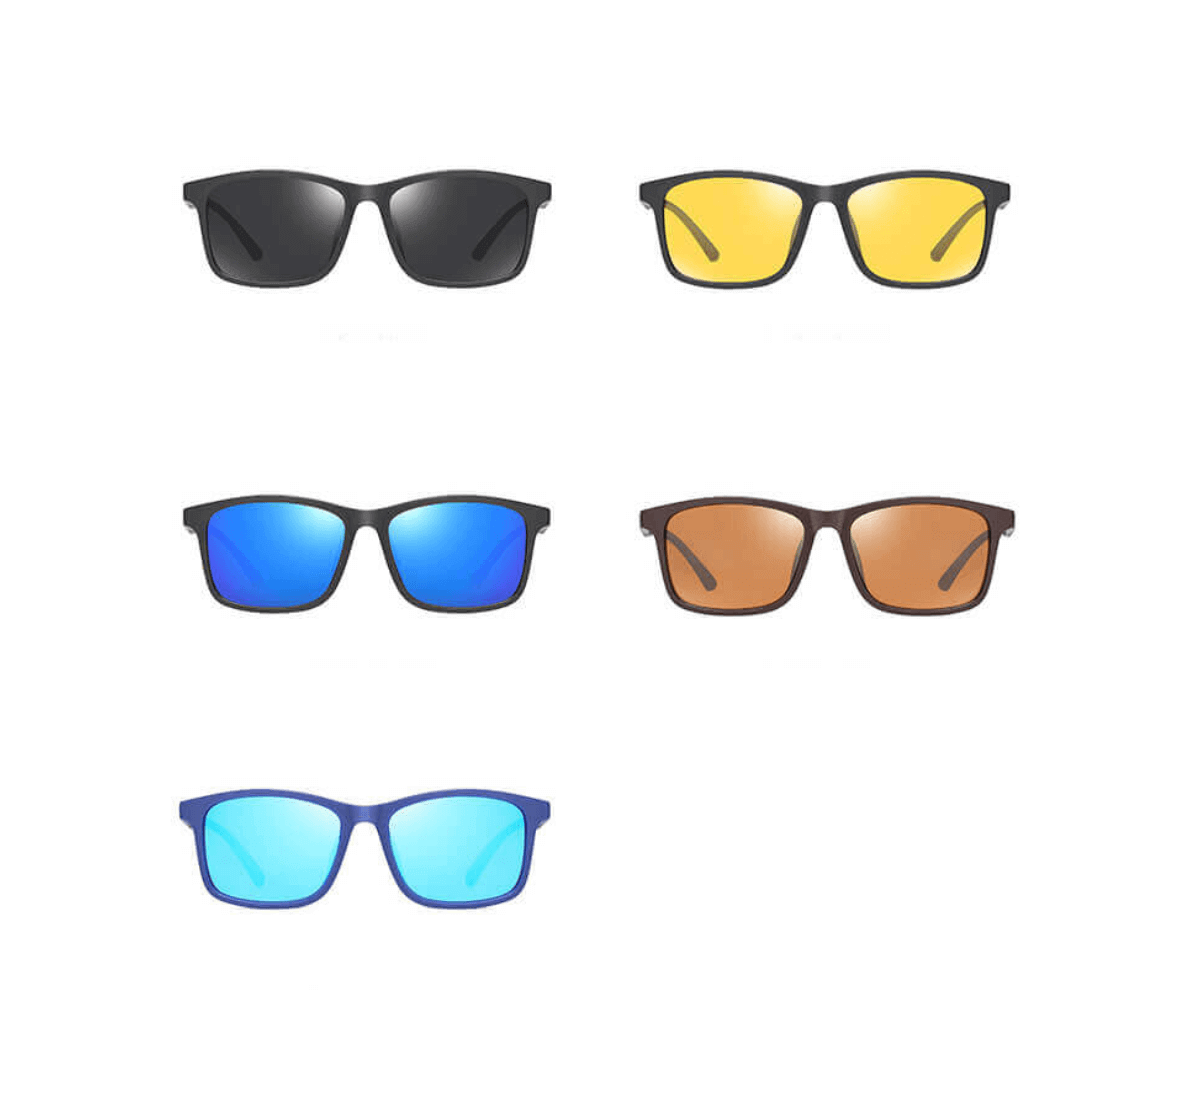 wholesale mens sunglasses, wholesale sunglasses bulk, shades wholesale, shades in bulk, wholesale shades sunglasses, high quality sunglasses wholesale, wholesale sunglasses supplier